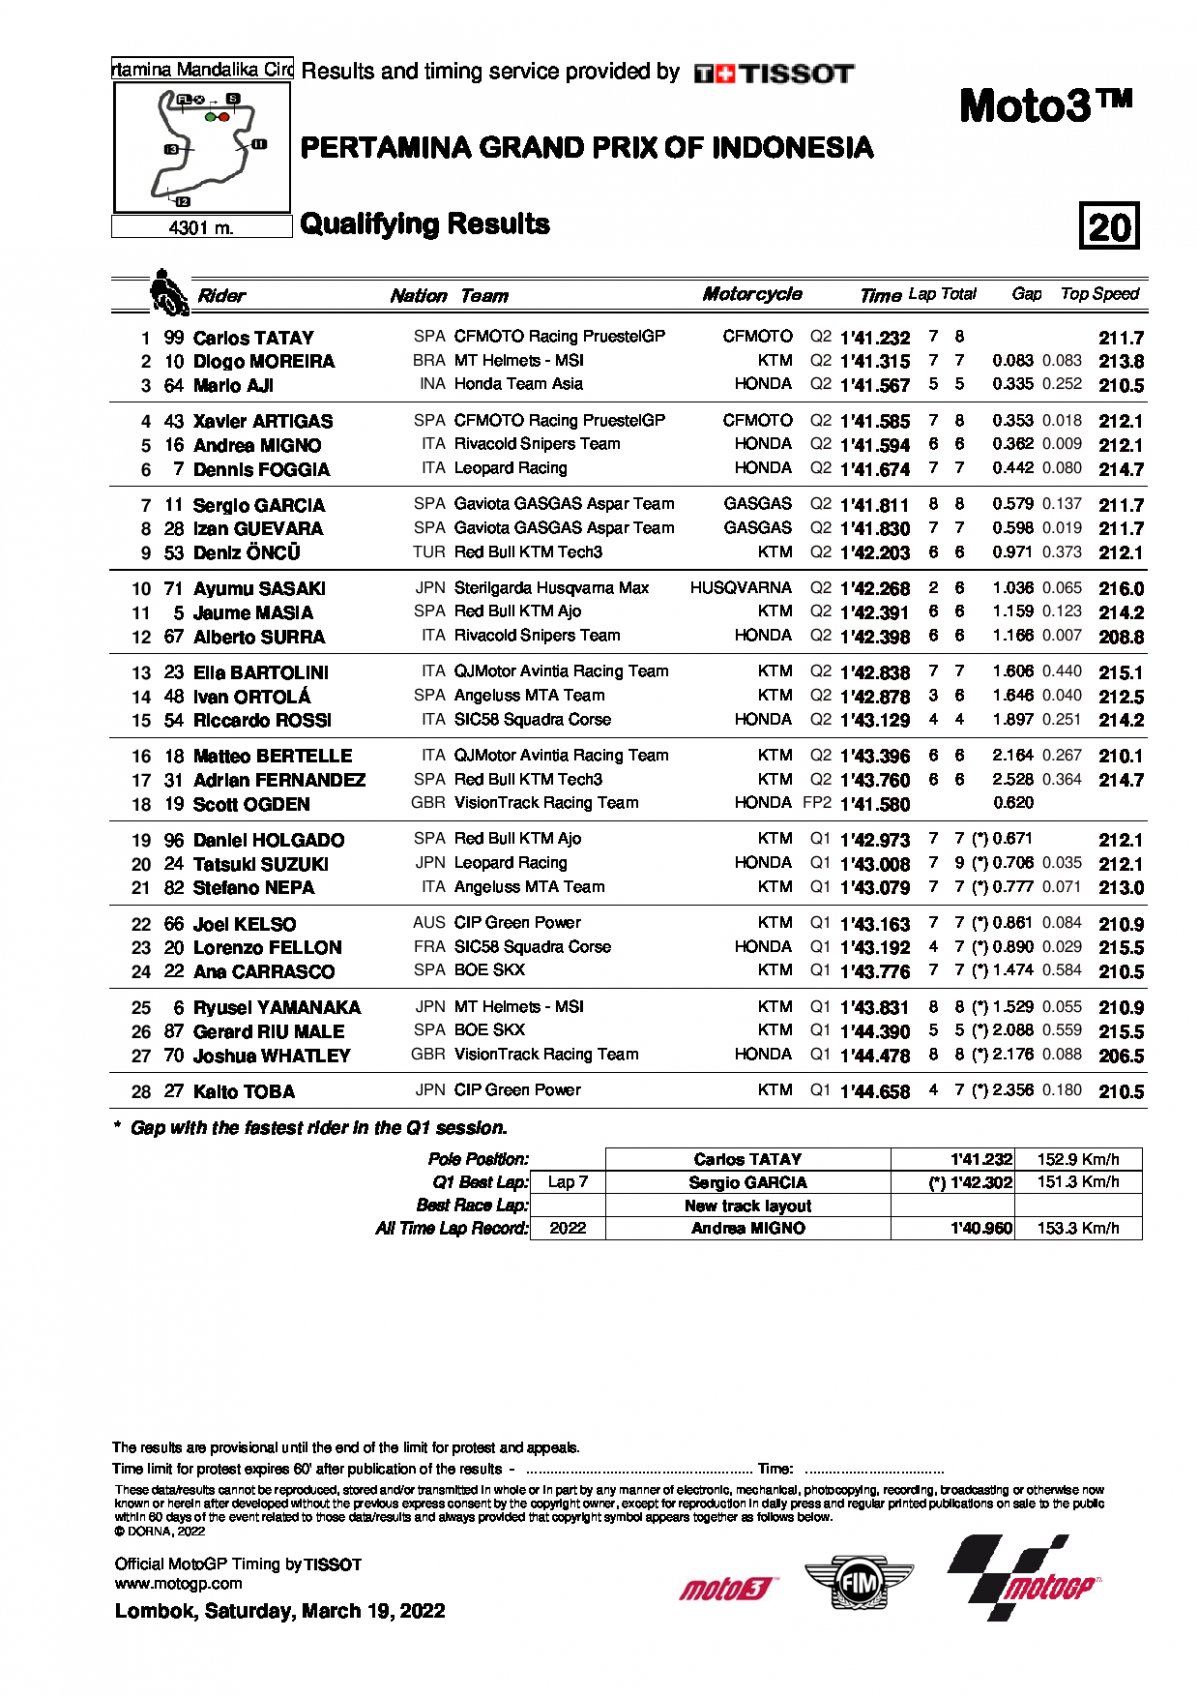 Результаты квалификации Гран-При Индонезии Moto3 (19/03/2022)